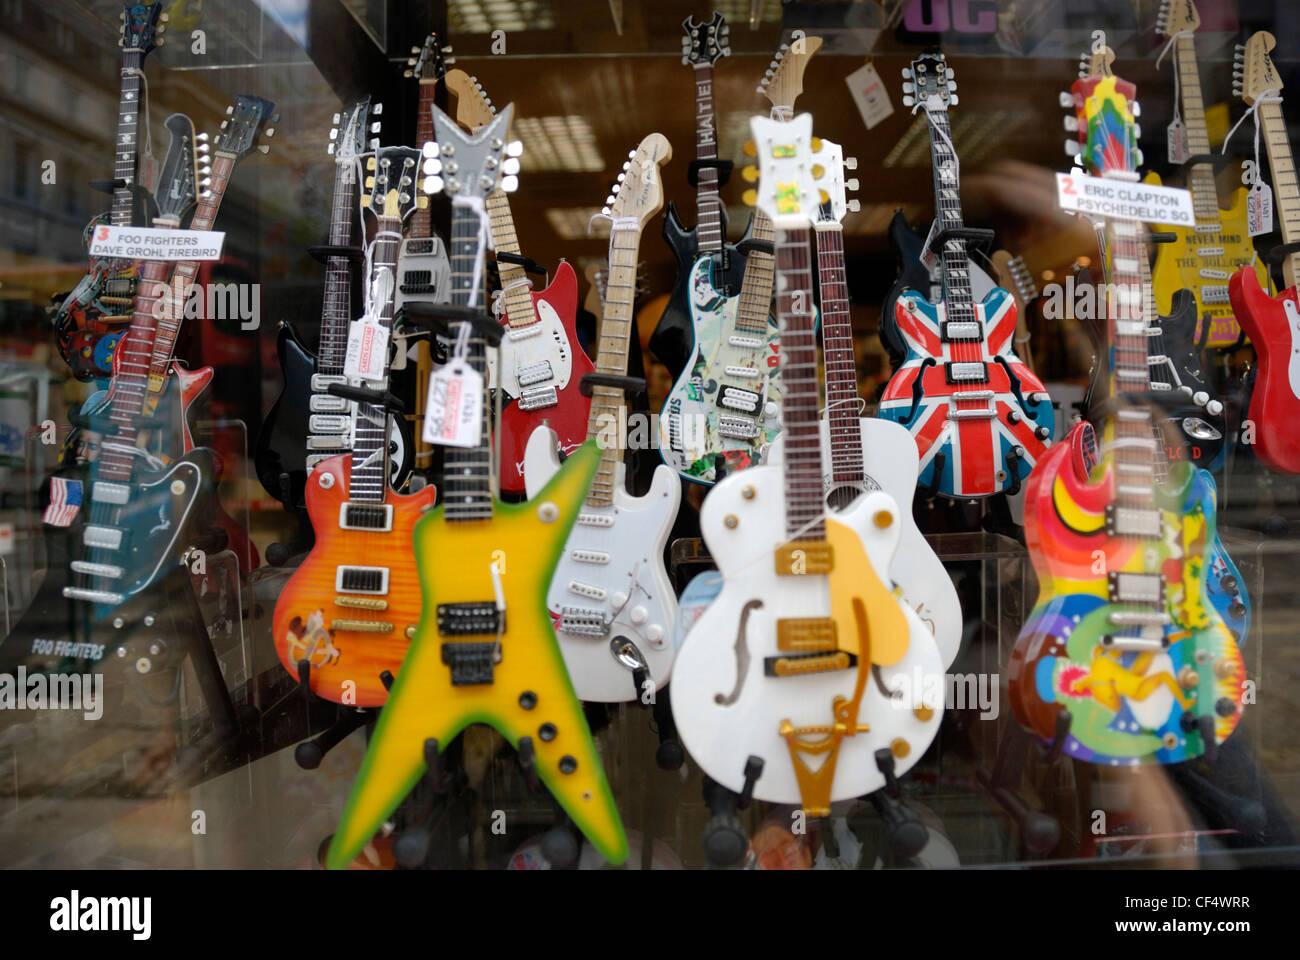 Colourful miniature replicas of electric guitars in a souvenir shop window. Stock Photo